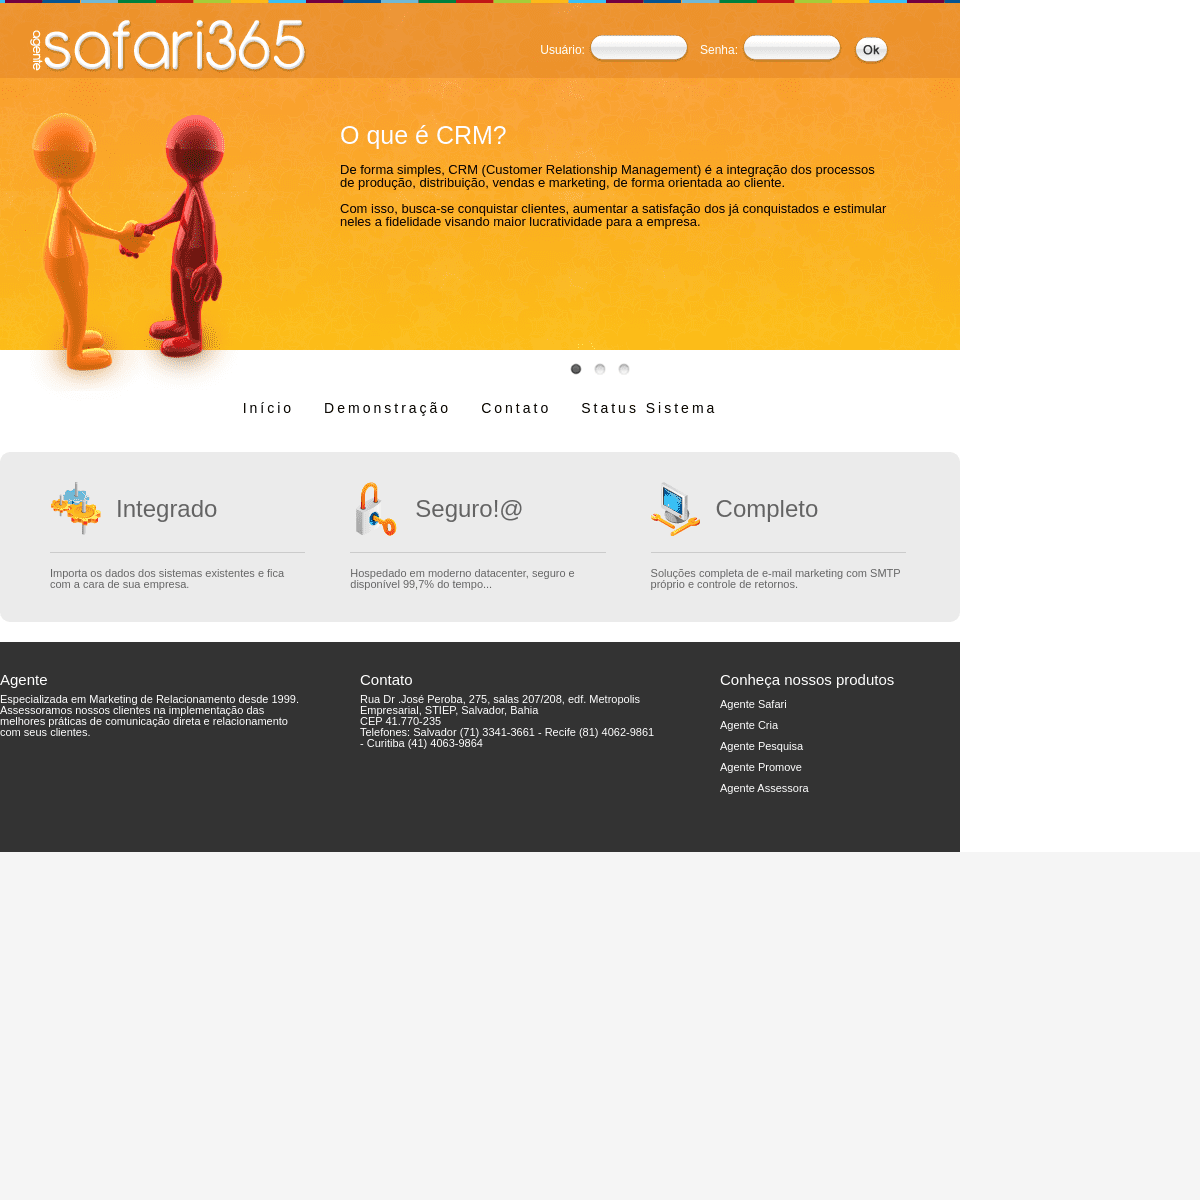 A complete backup of https://safari365.com.br